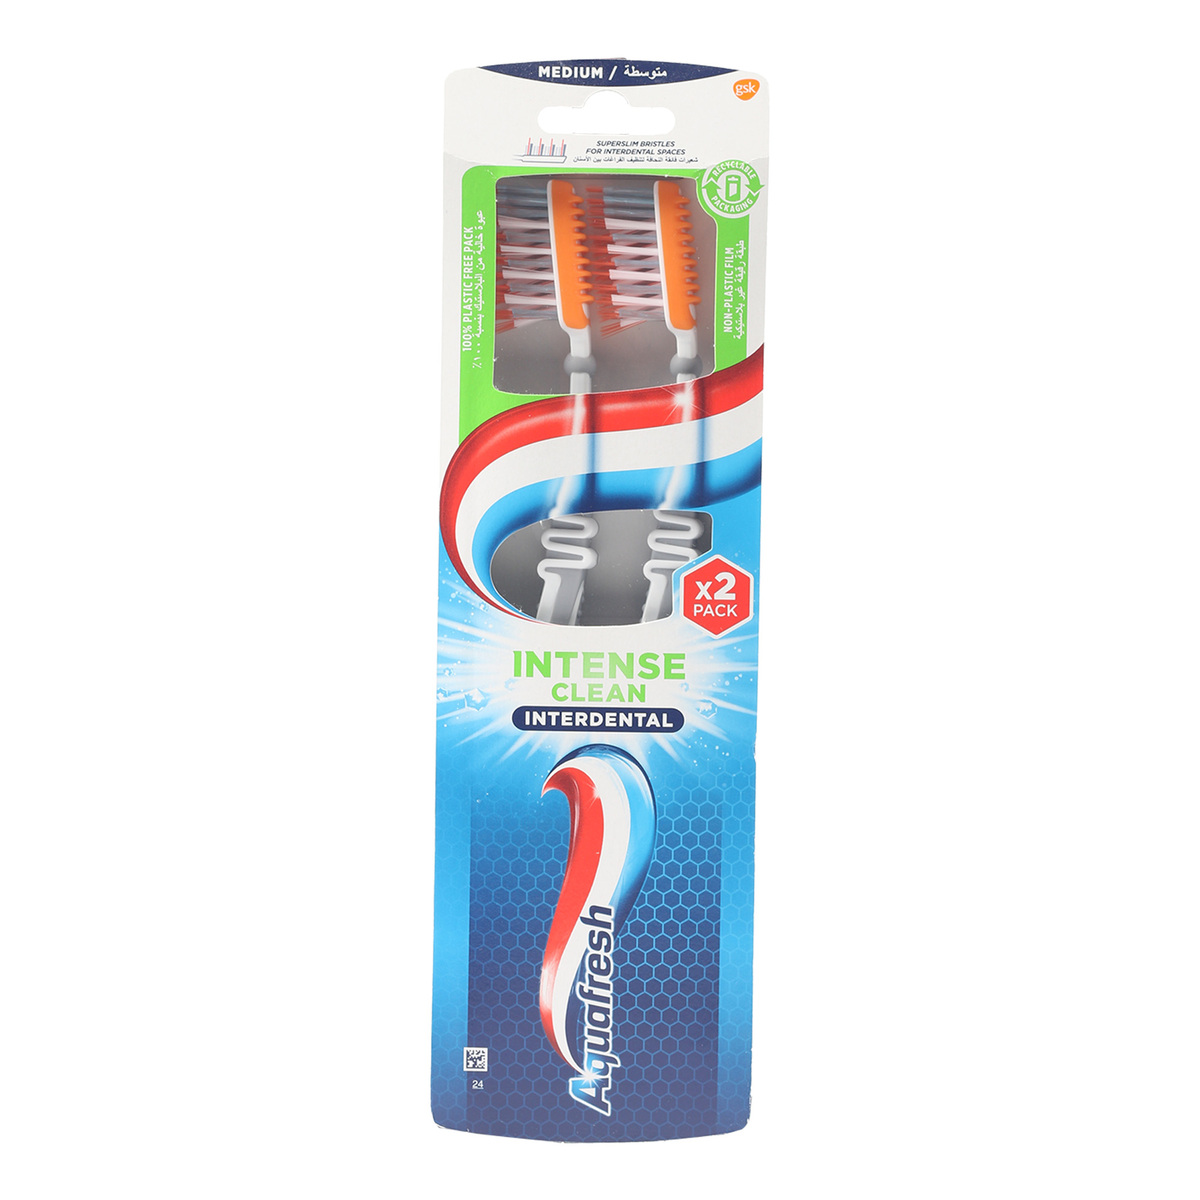 Aquafresh Intense Clean Interdental Medium Tooth Brush 1 + 1